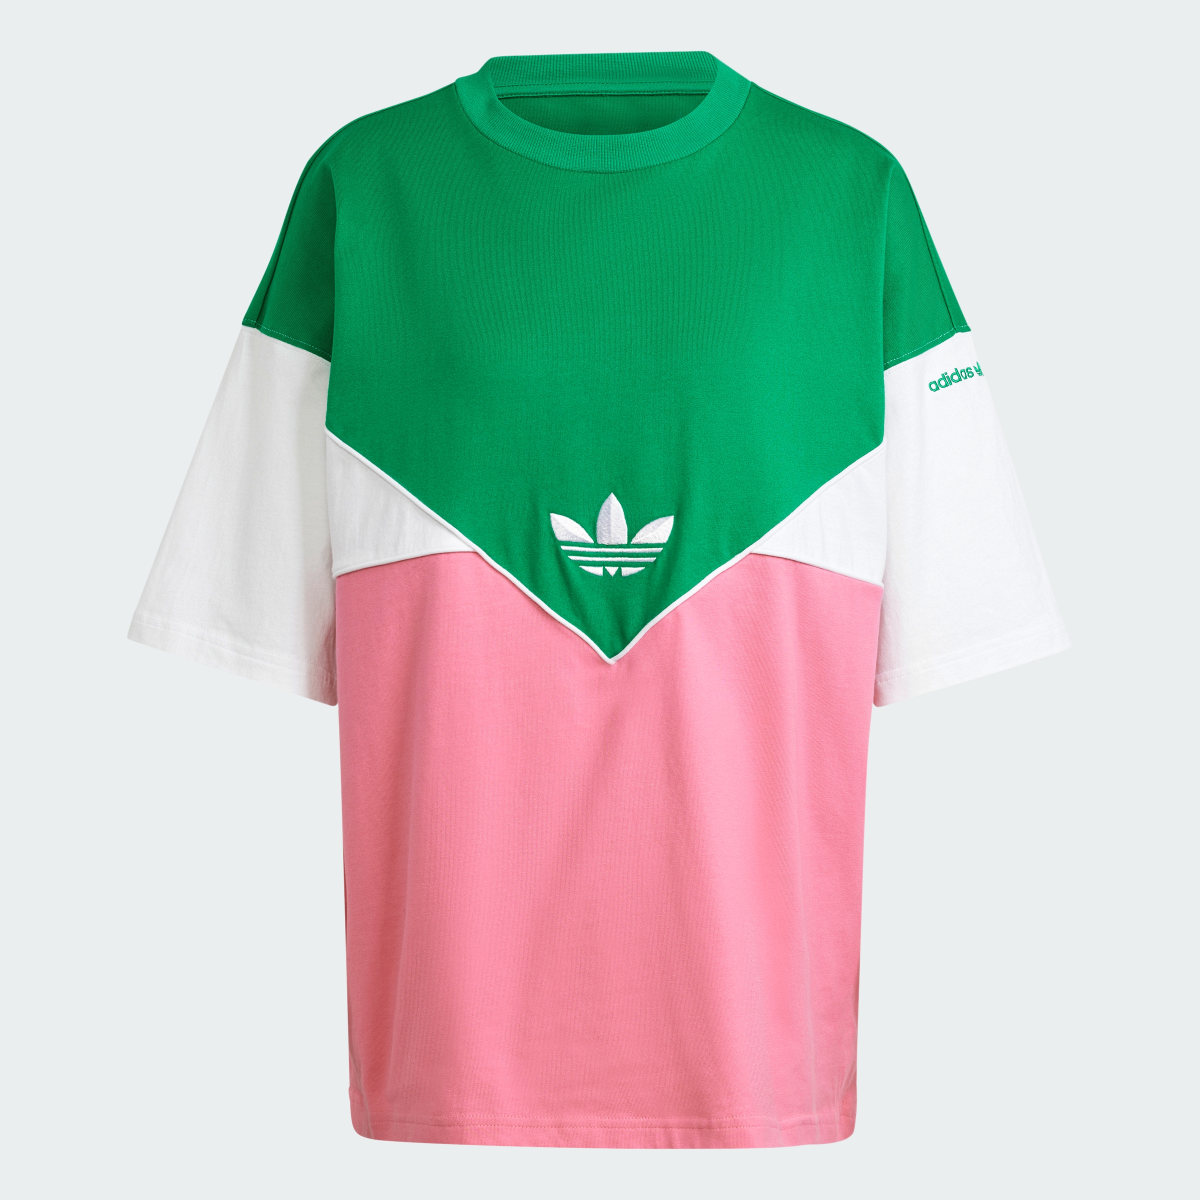 Adidas T-Shirt. 6